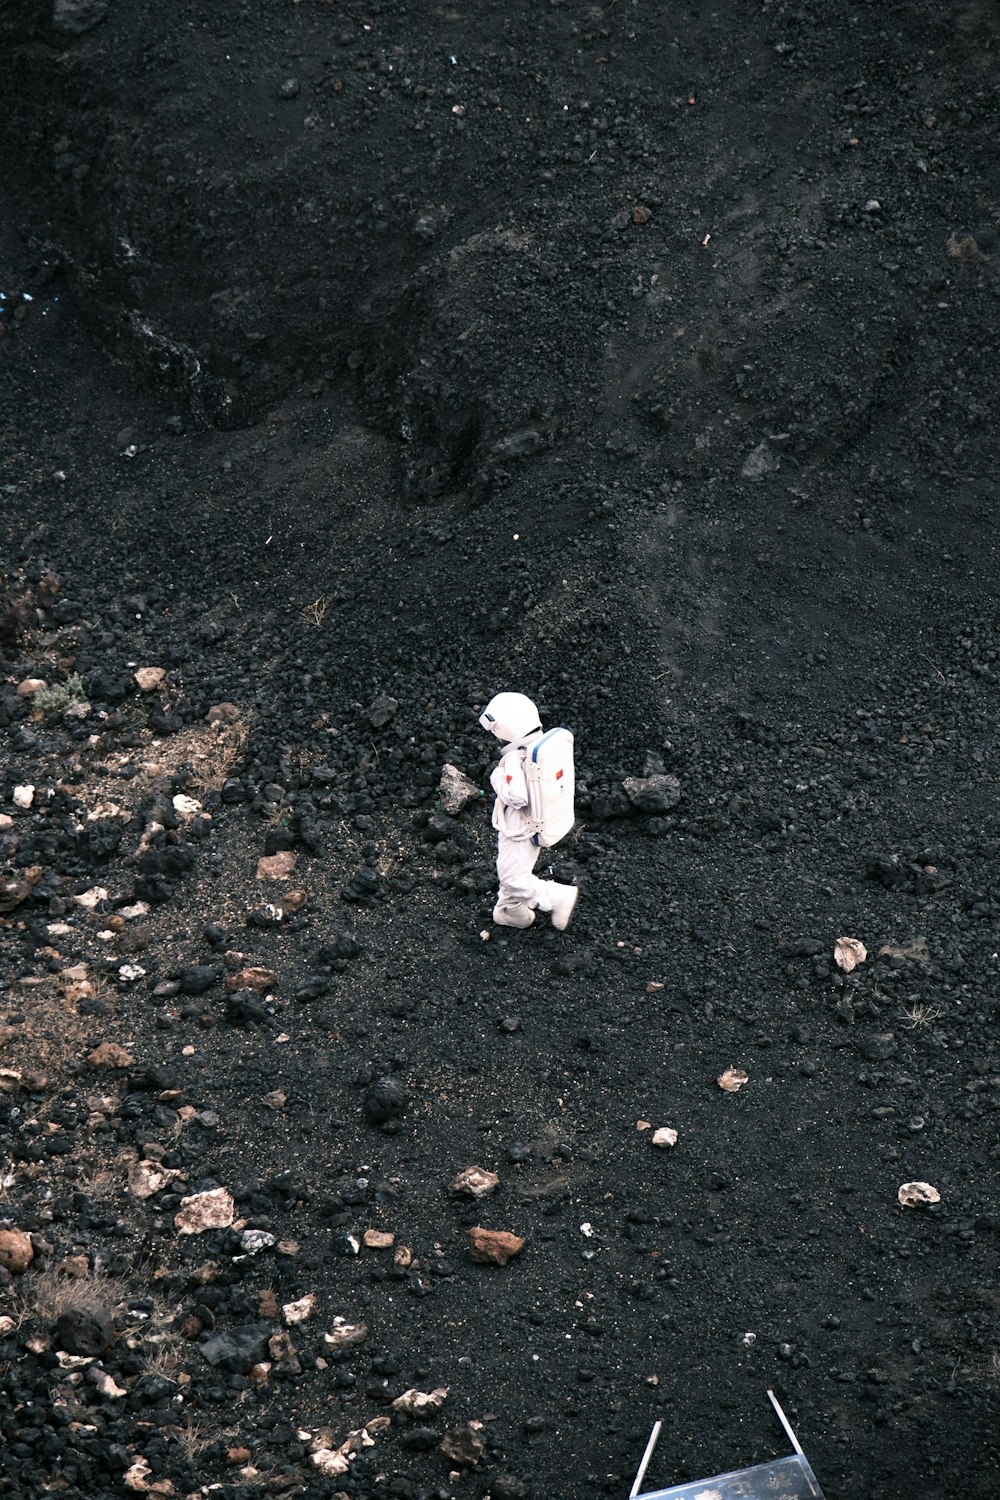 a small toy astronaut walking across a dirt field